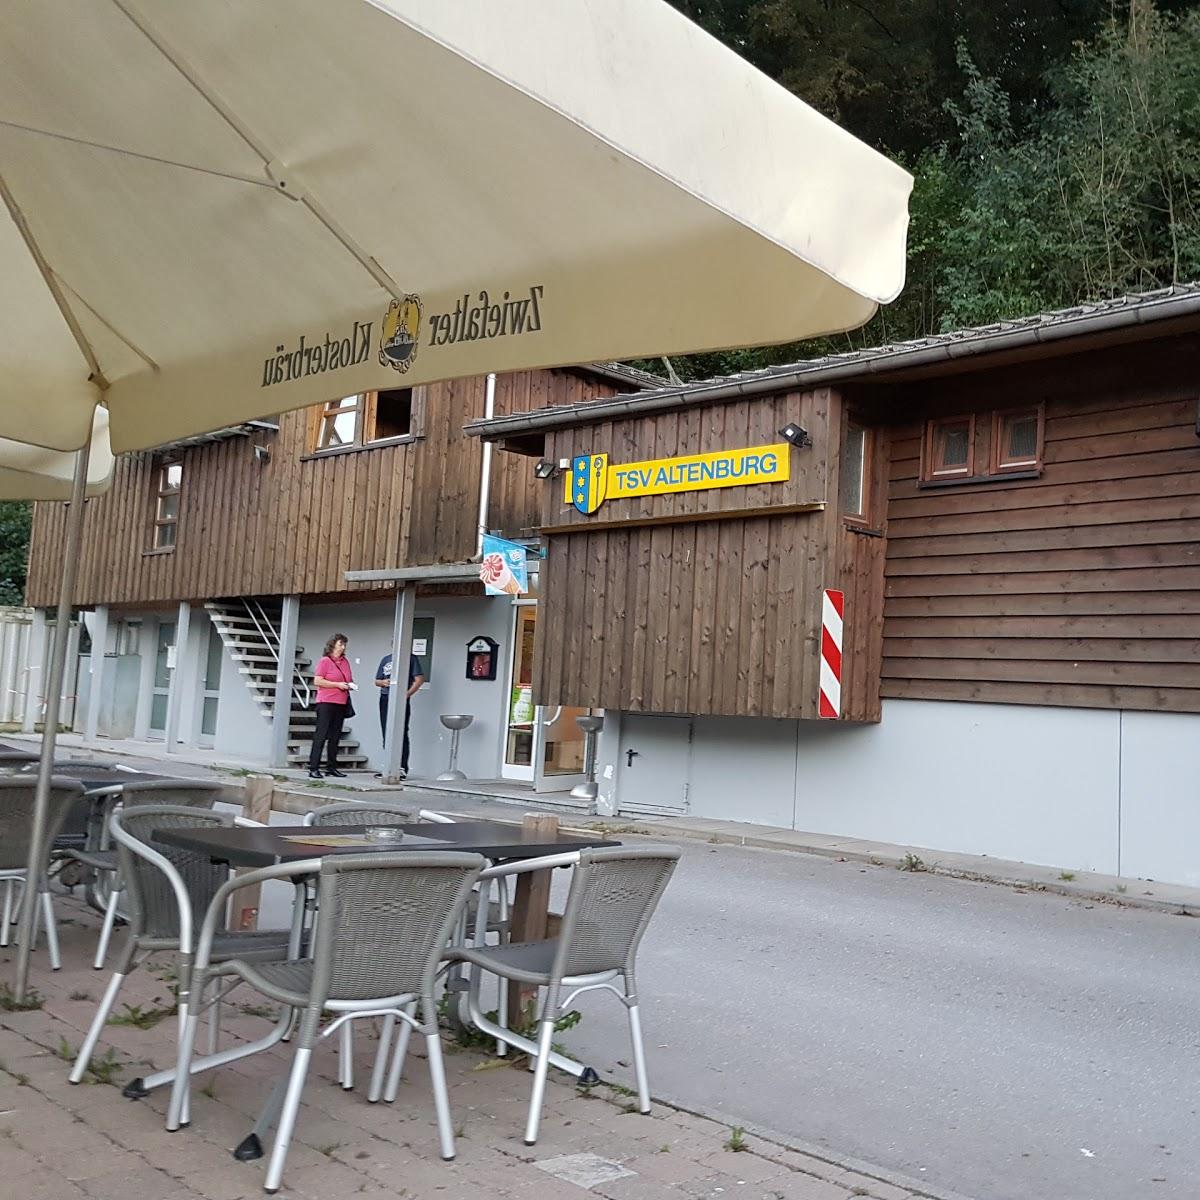 Restaurant "Sportgaststätte Tsv Altenburg" in  Reutlingen